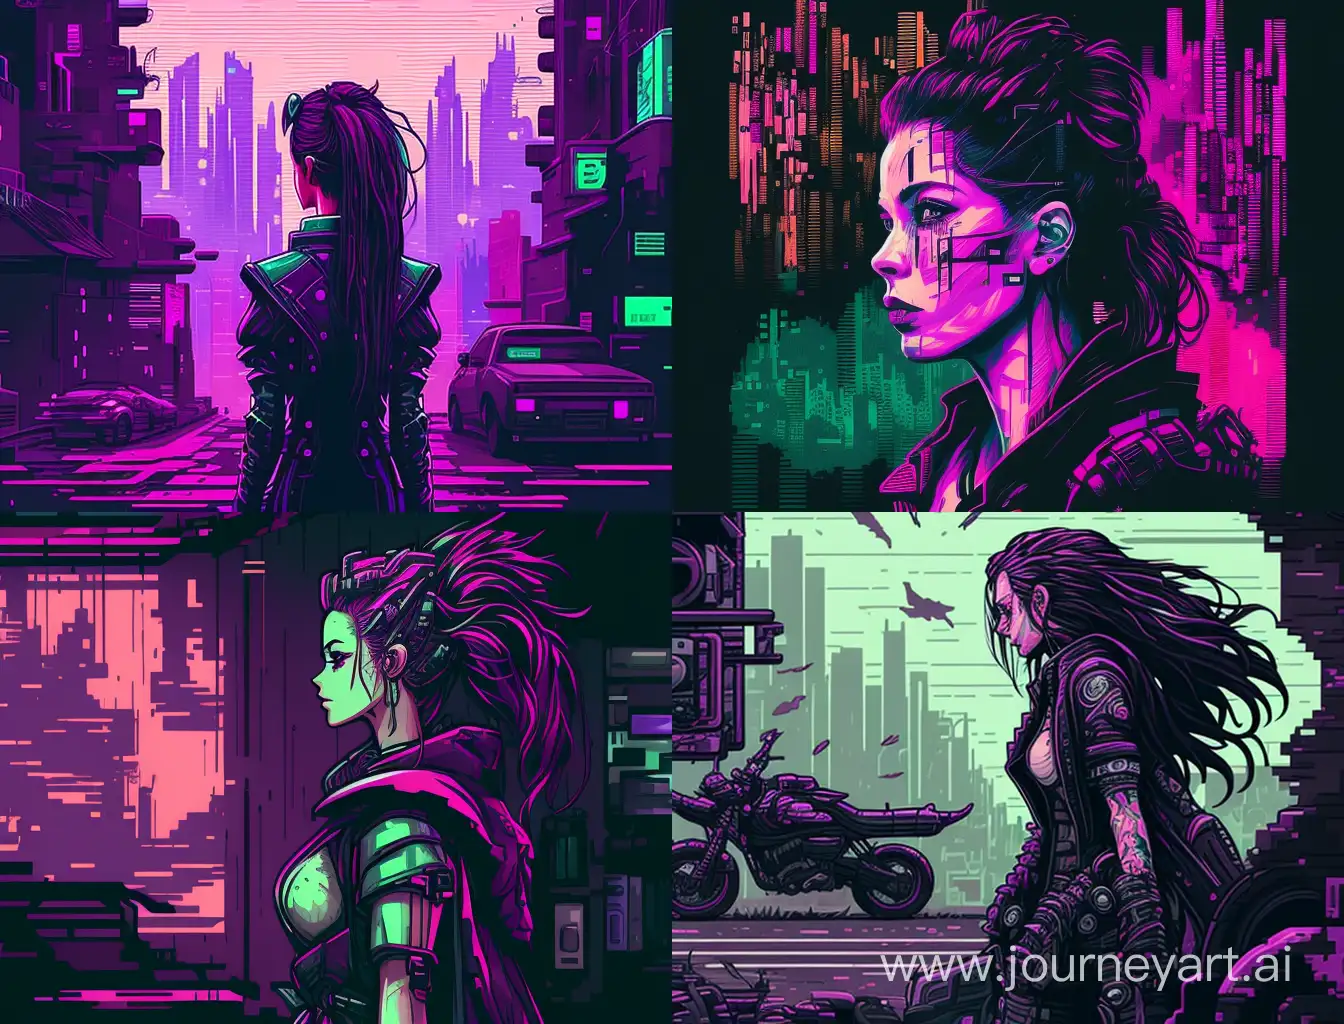 Cyberpunk-Pixel-Art-Vibrant-Purple-Pink-and-Green-Illustration